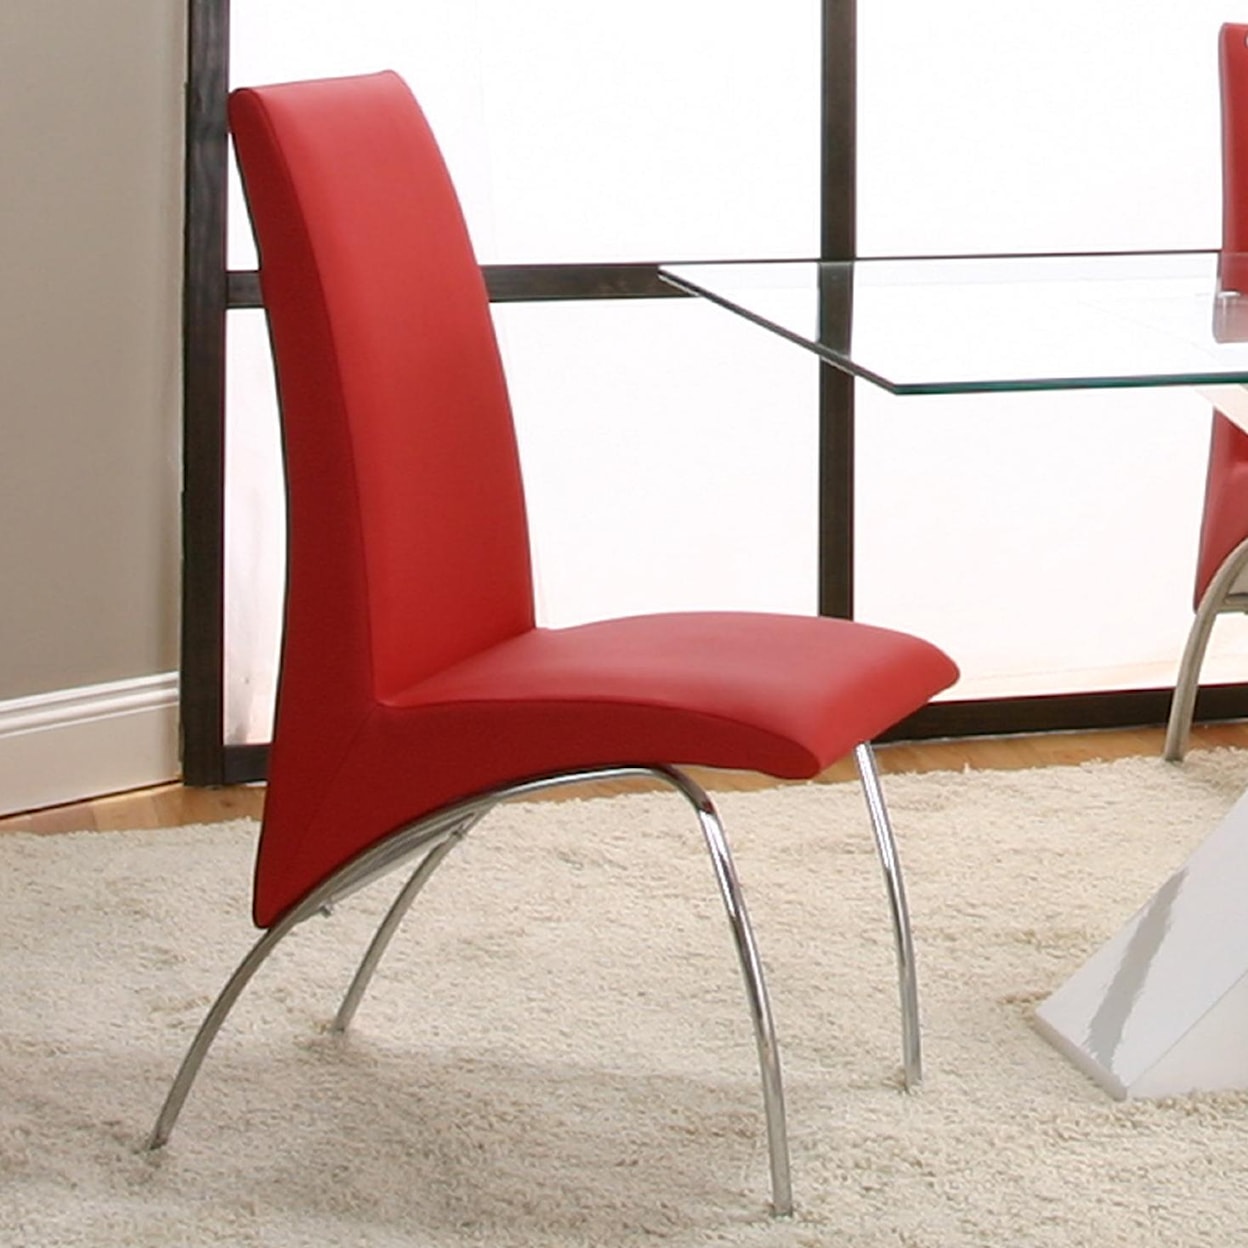 Cramco, Inc Mensa 5 Piece Table & Chair Set